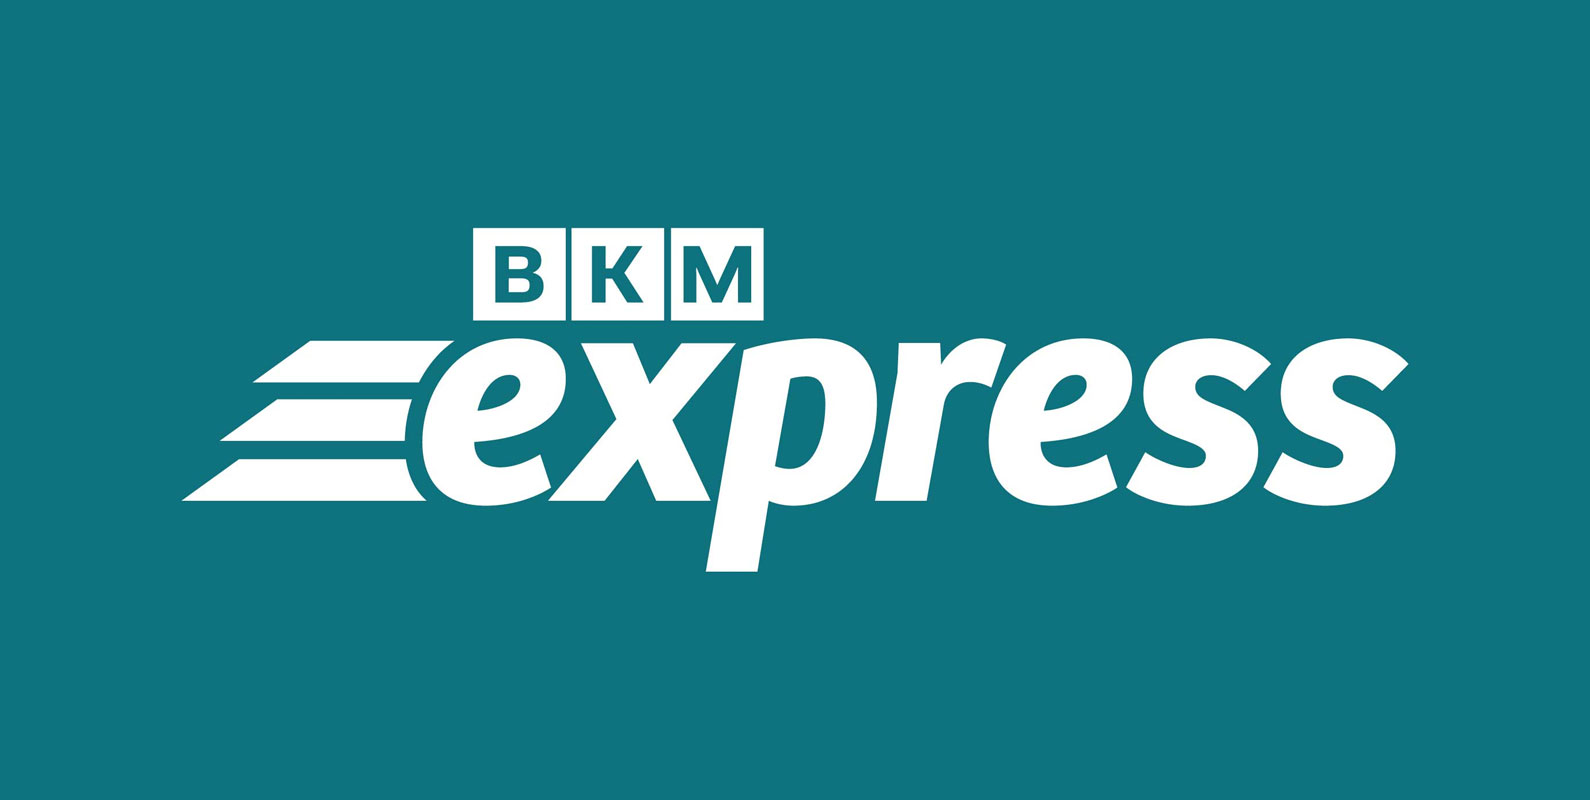 bkm-express-nedir